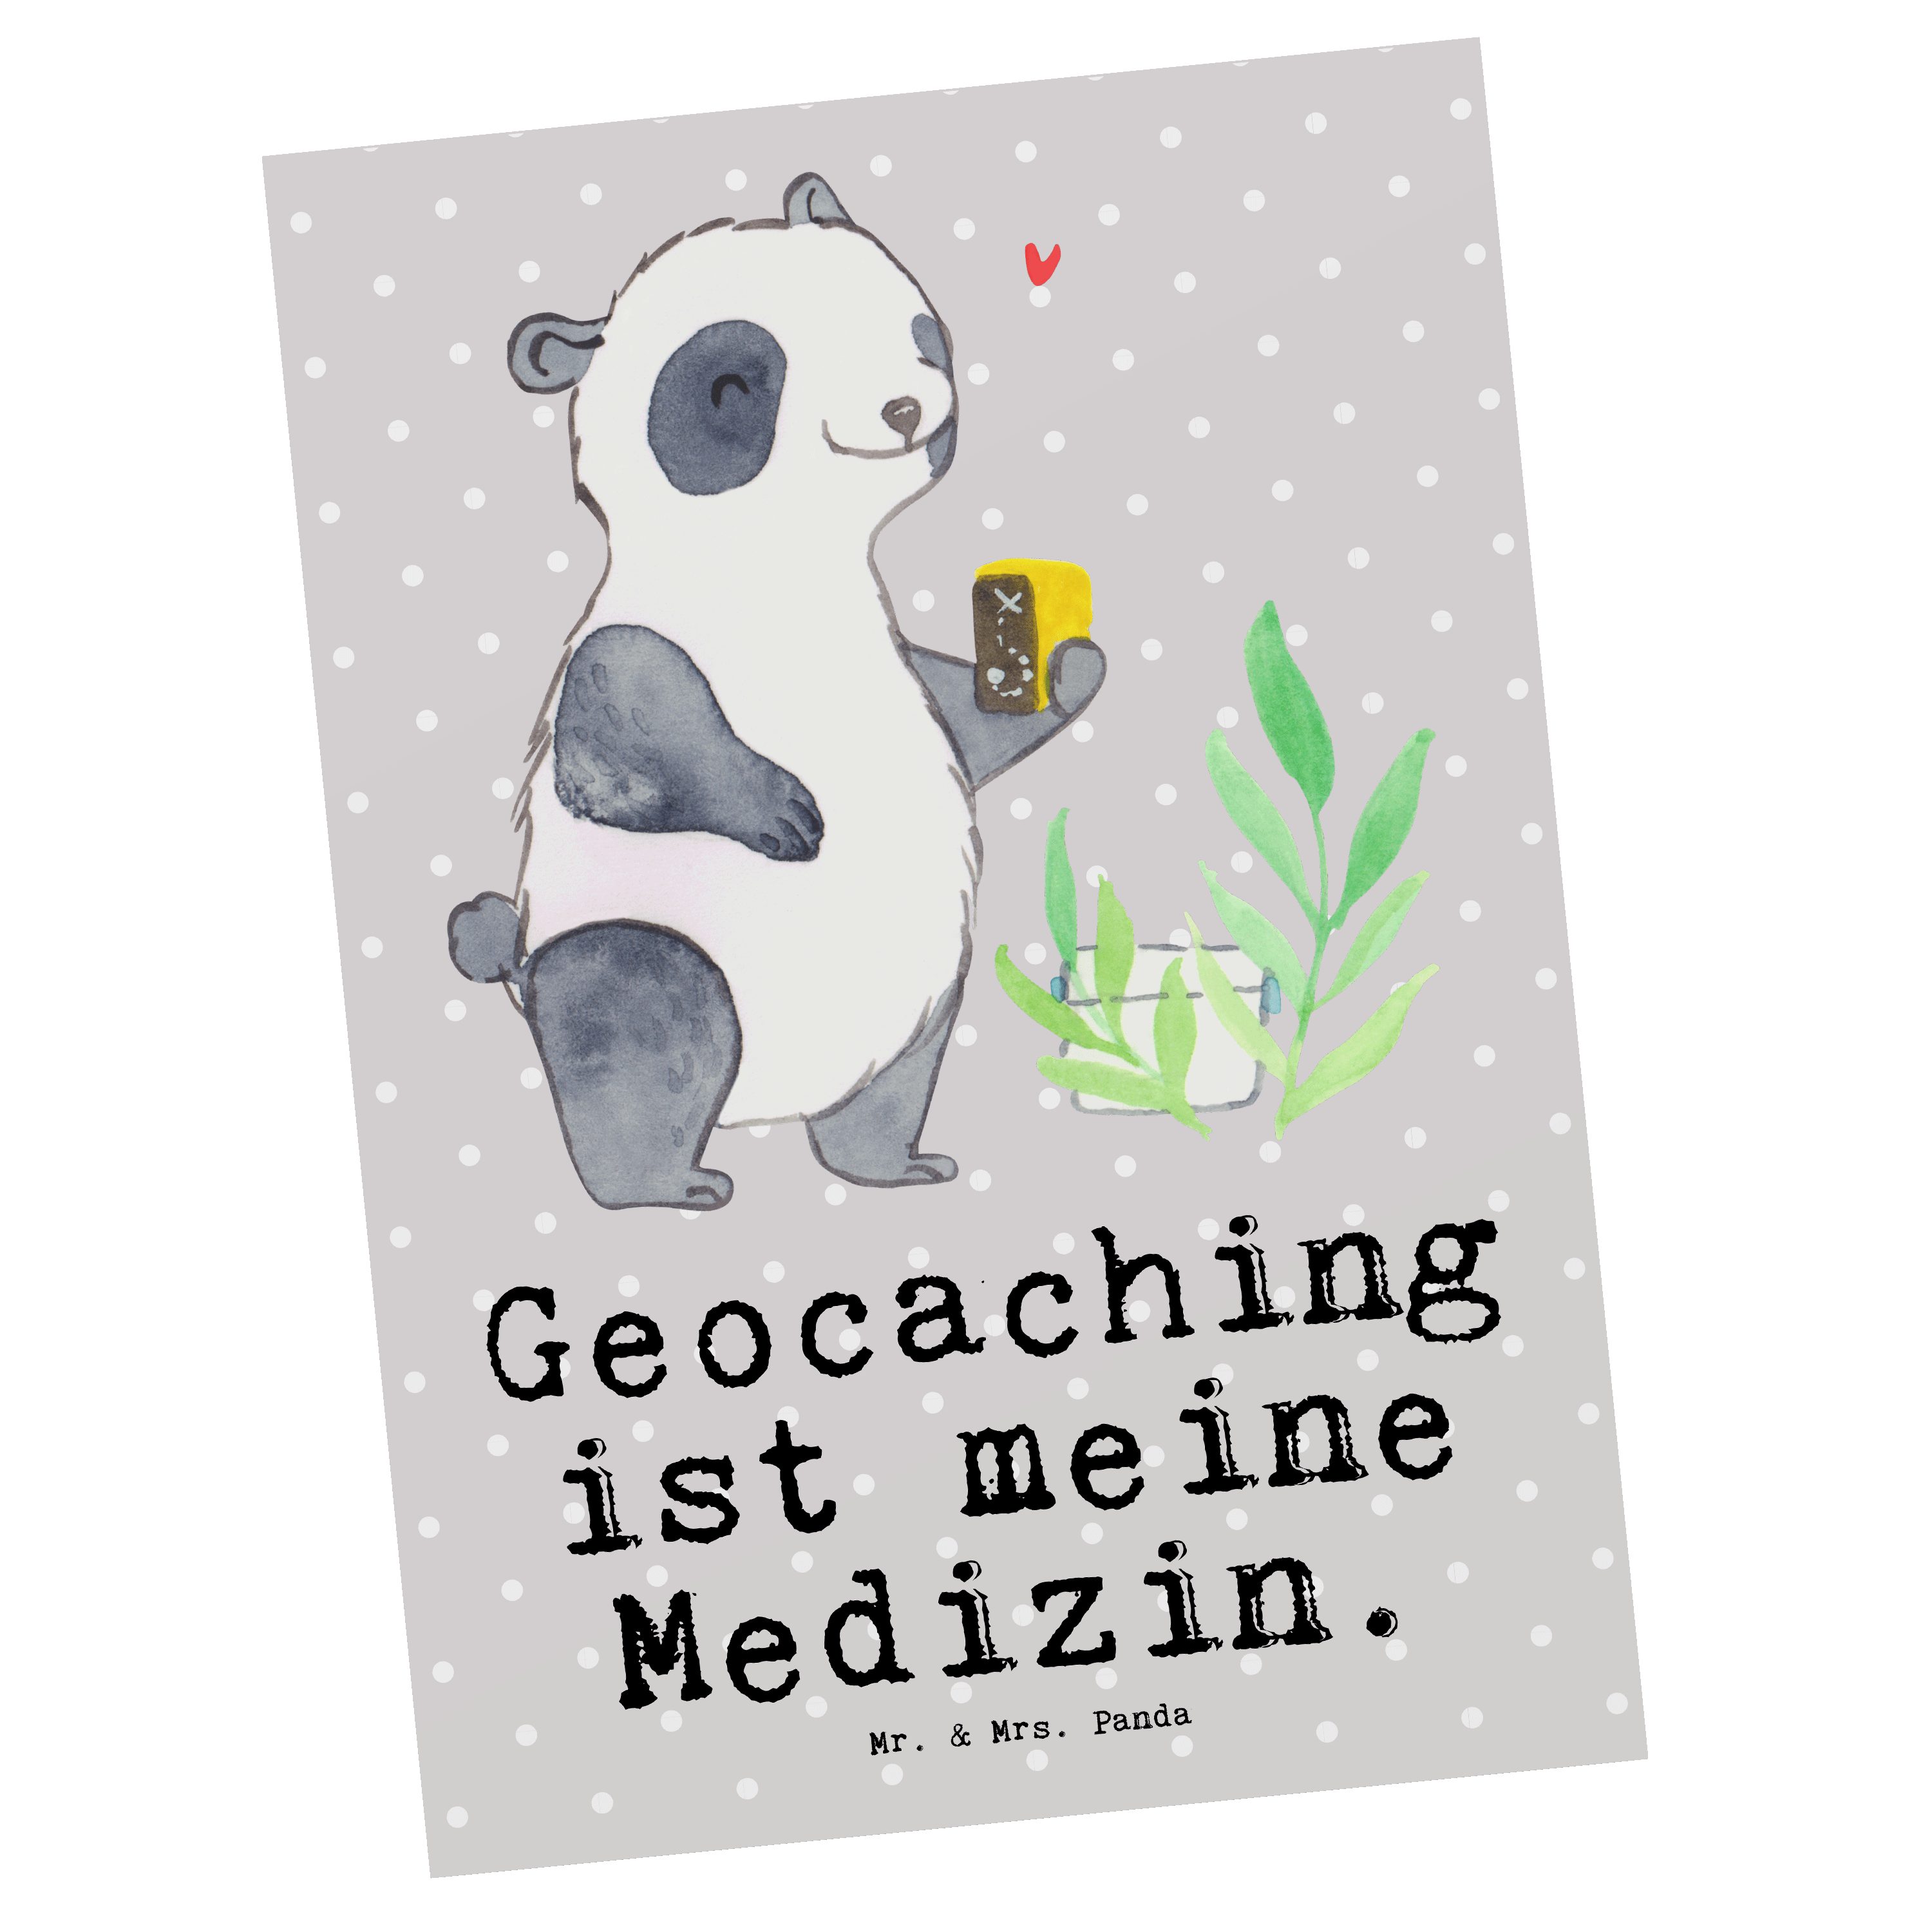 Mr. & Mrs. Panda Postkarte Panda Geocaching Medizin - Grau Pastell - Geschenk, Grußkarte, Ansich